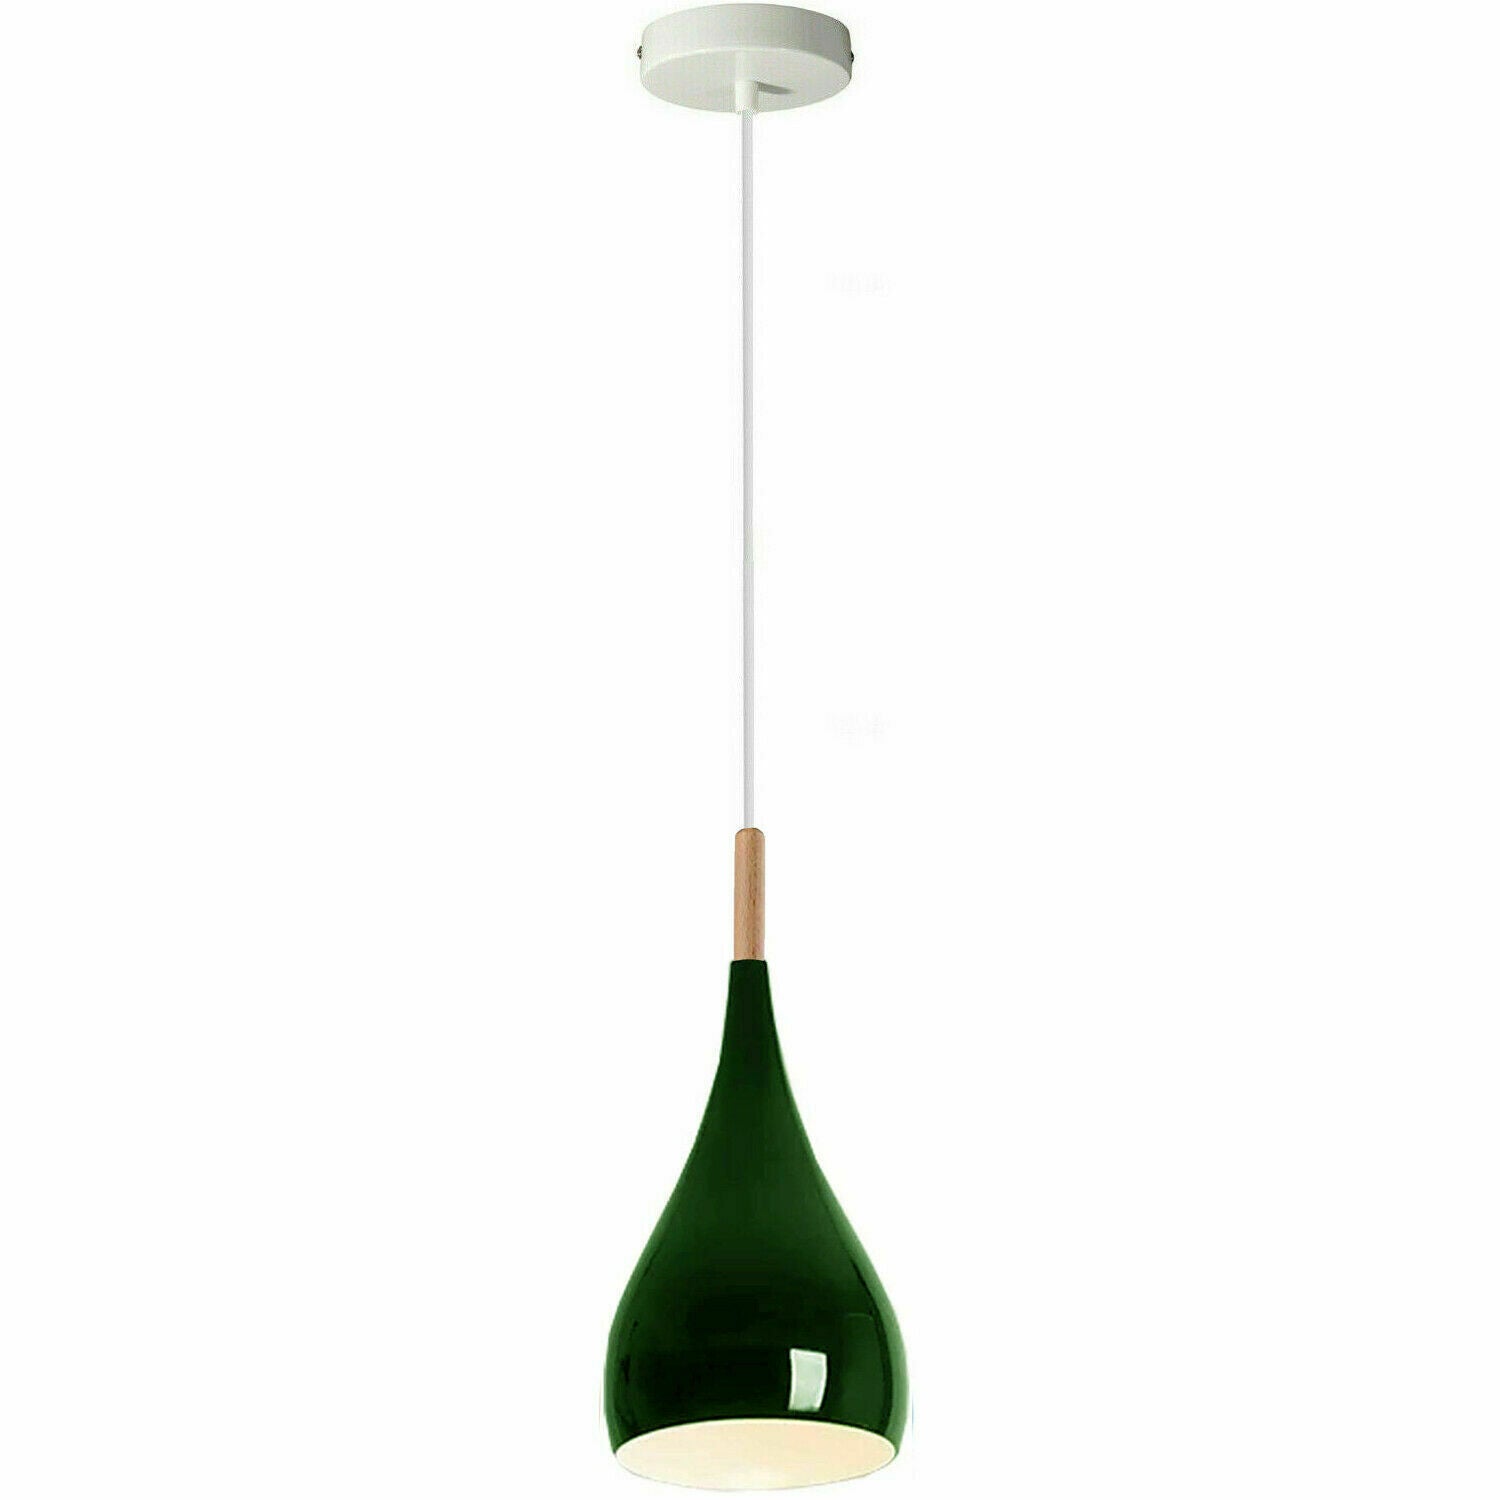 Green colour Retro Style Metal Ceiling Hanging Pendant Light Shade Modern Design~1652 - LEDSone UK Ltd